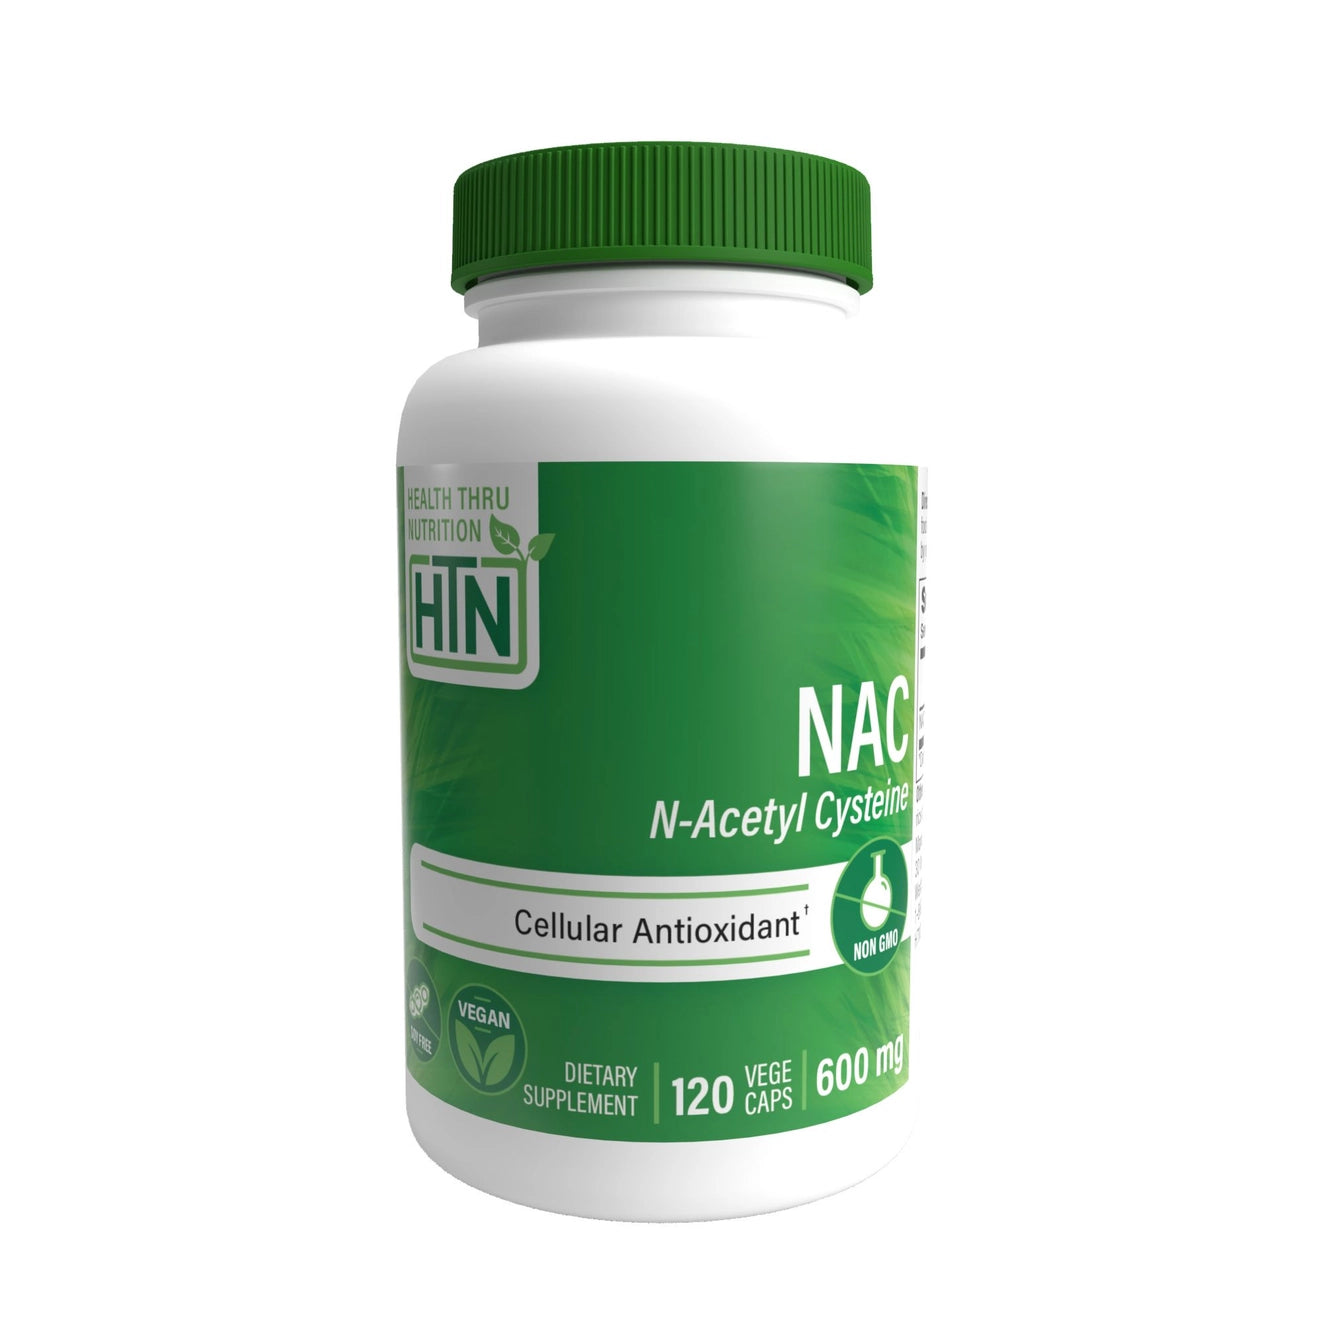 HEALTH THRU NUTRITION N-ACÉTYL CYSTÉINE (NAC) - 600MG, 120 CAPSULES